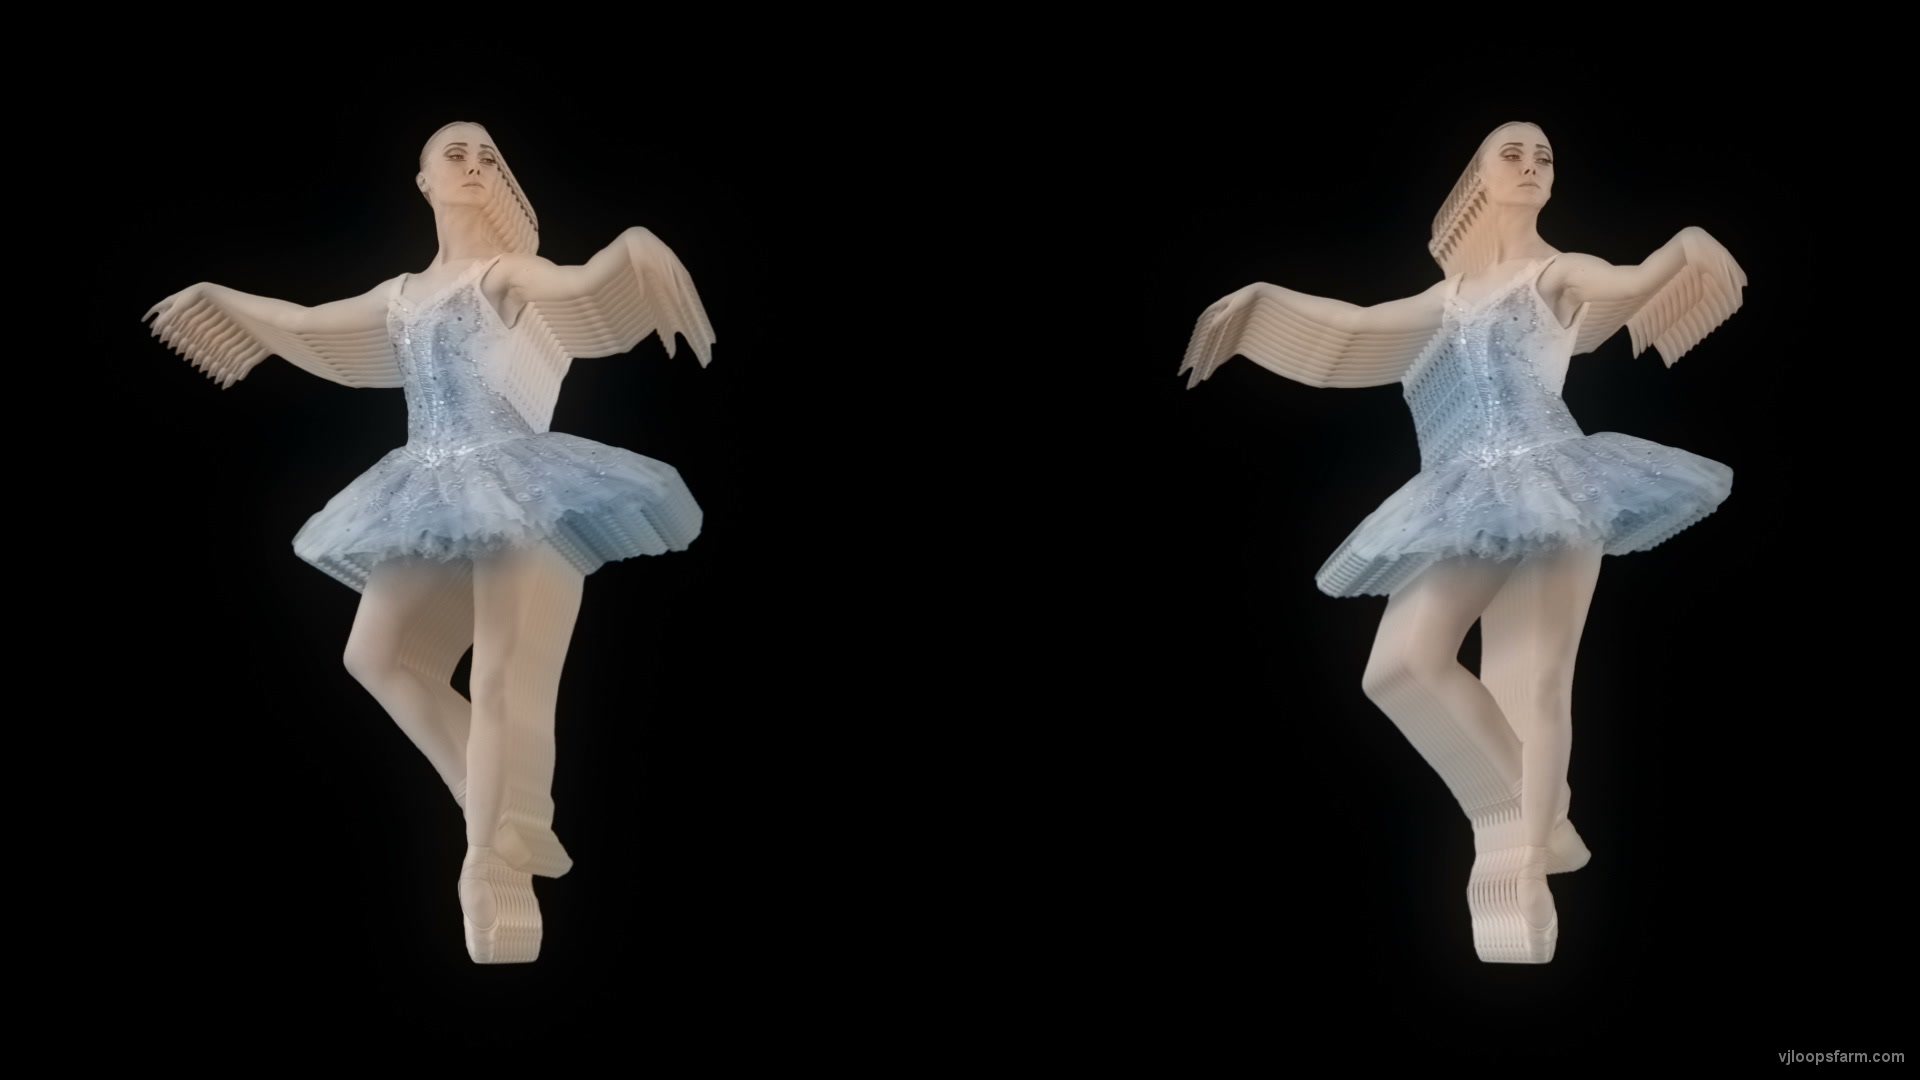 Beauty Art Tunnel of blonde ballerin ballet dancing girls in blue dress spinning 30fps Full HD Video VJ Footage